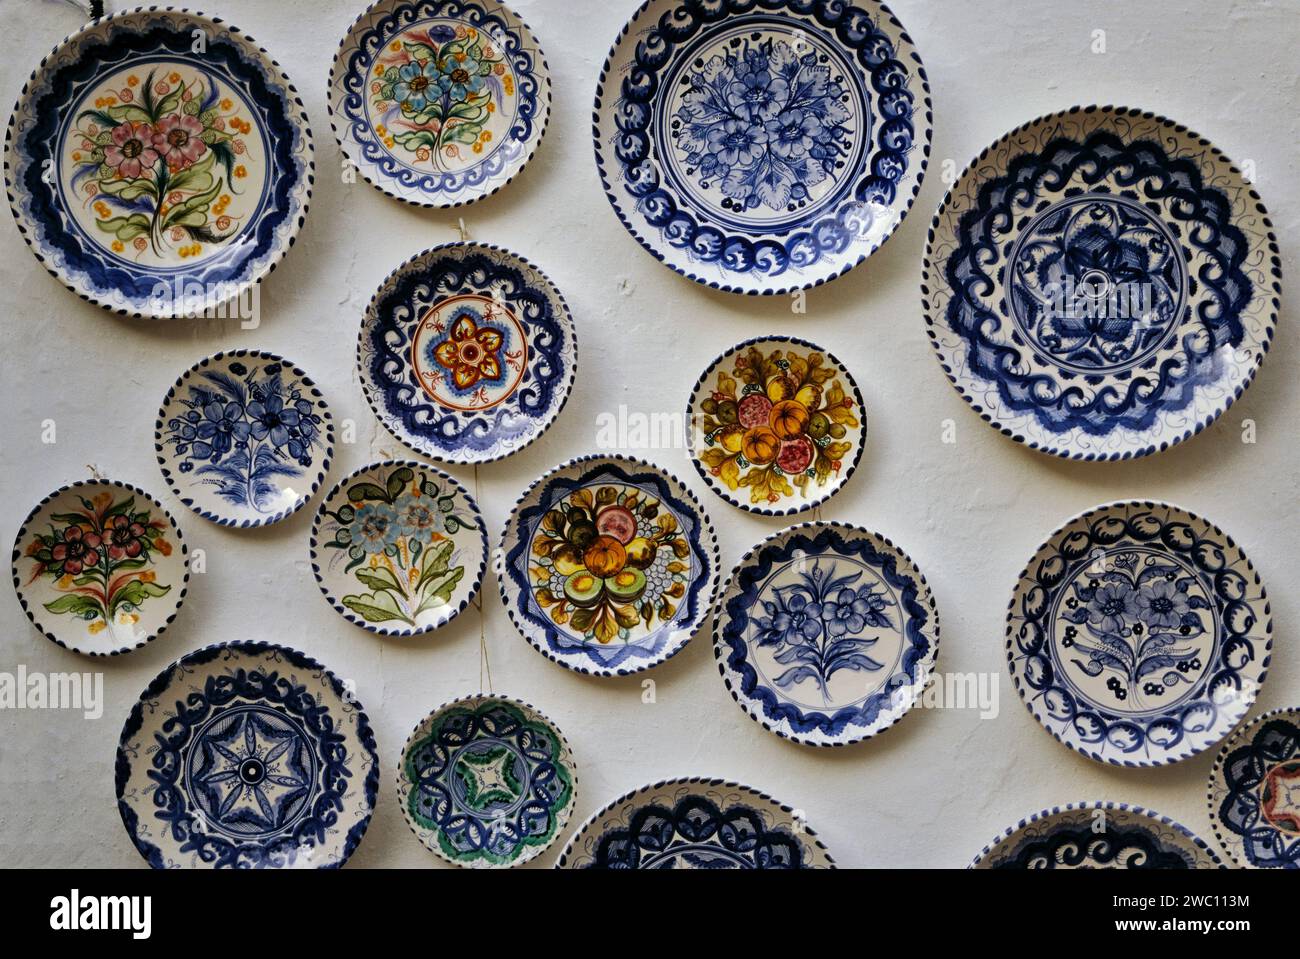 Handmade ceramic plates display at shop in Juderia, Old Jewish quarter in Cordoba, Andalusia, Spain Stock Photo